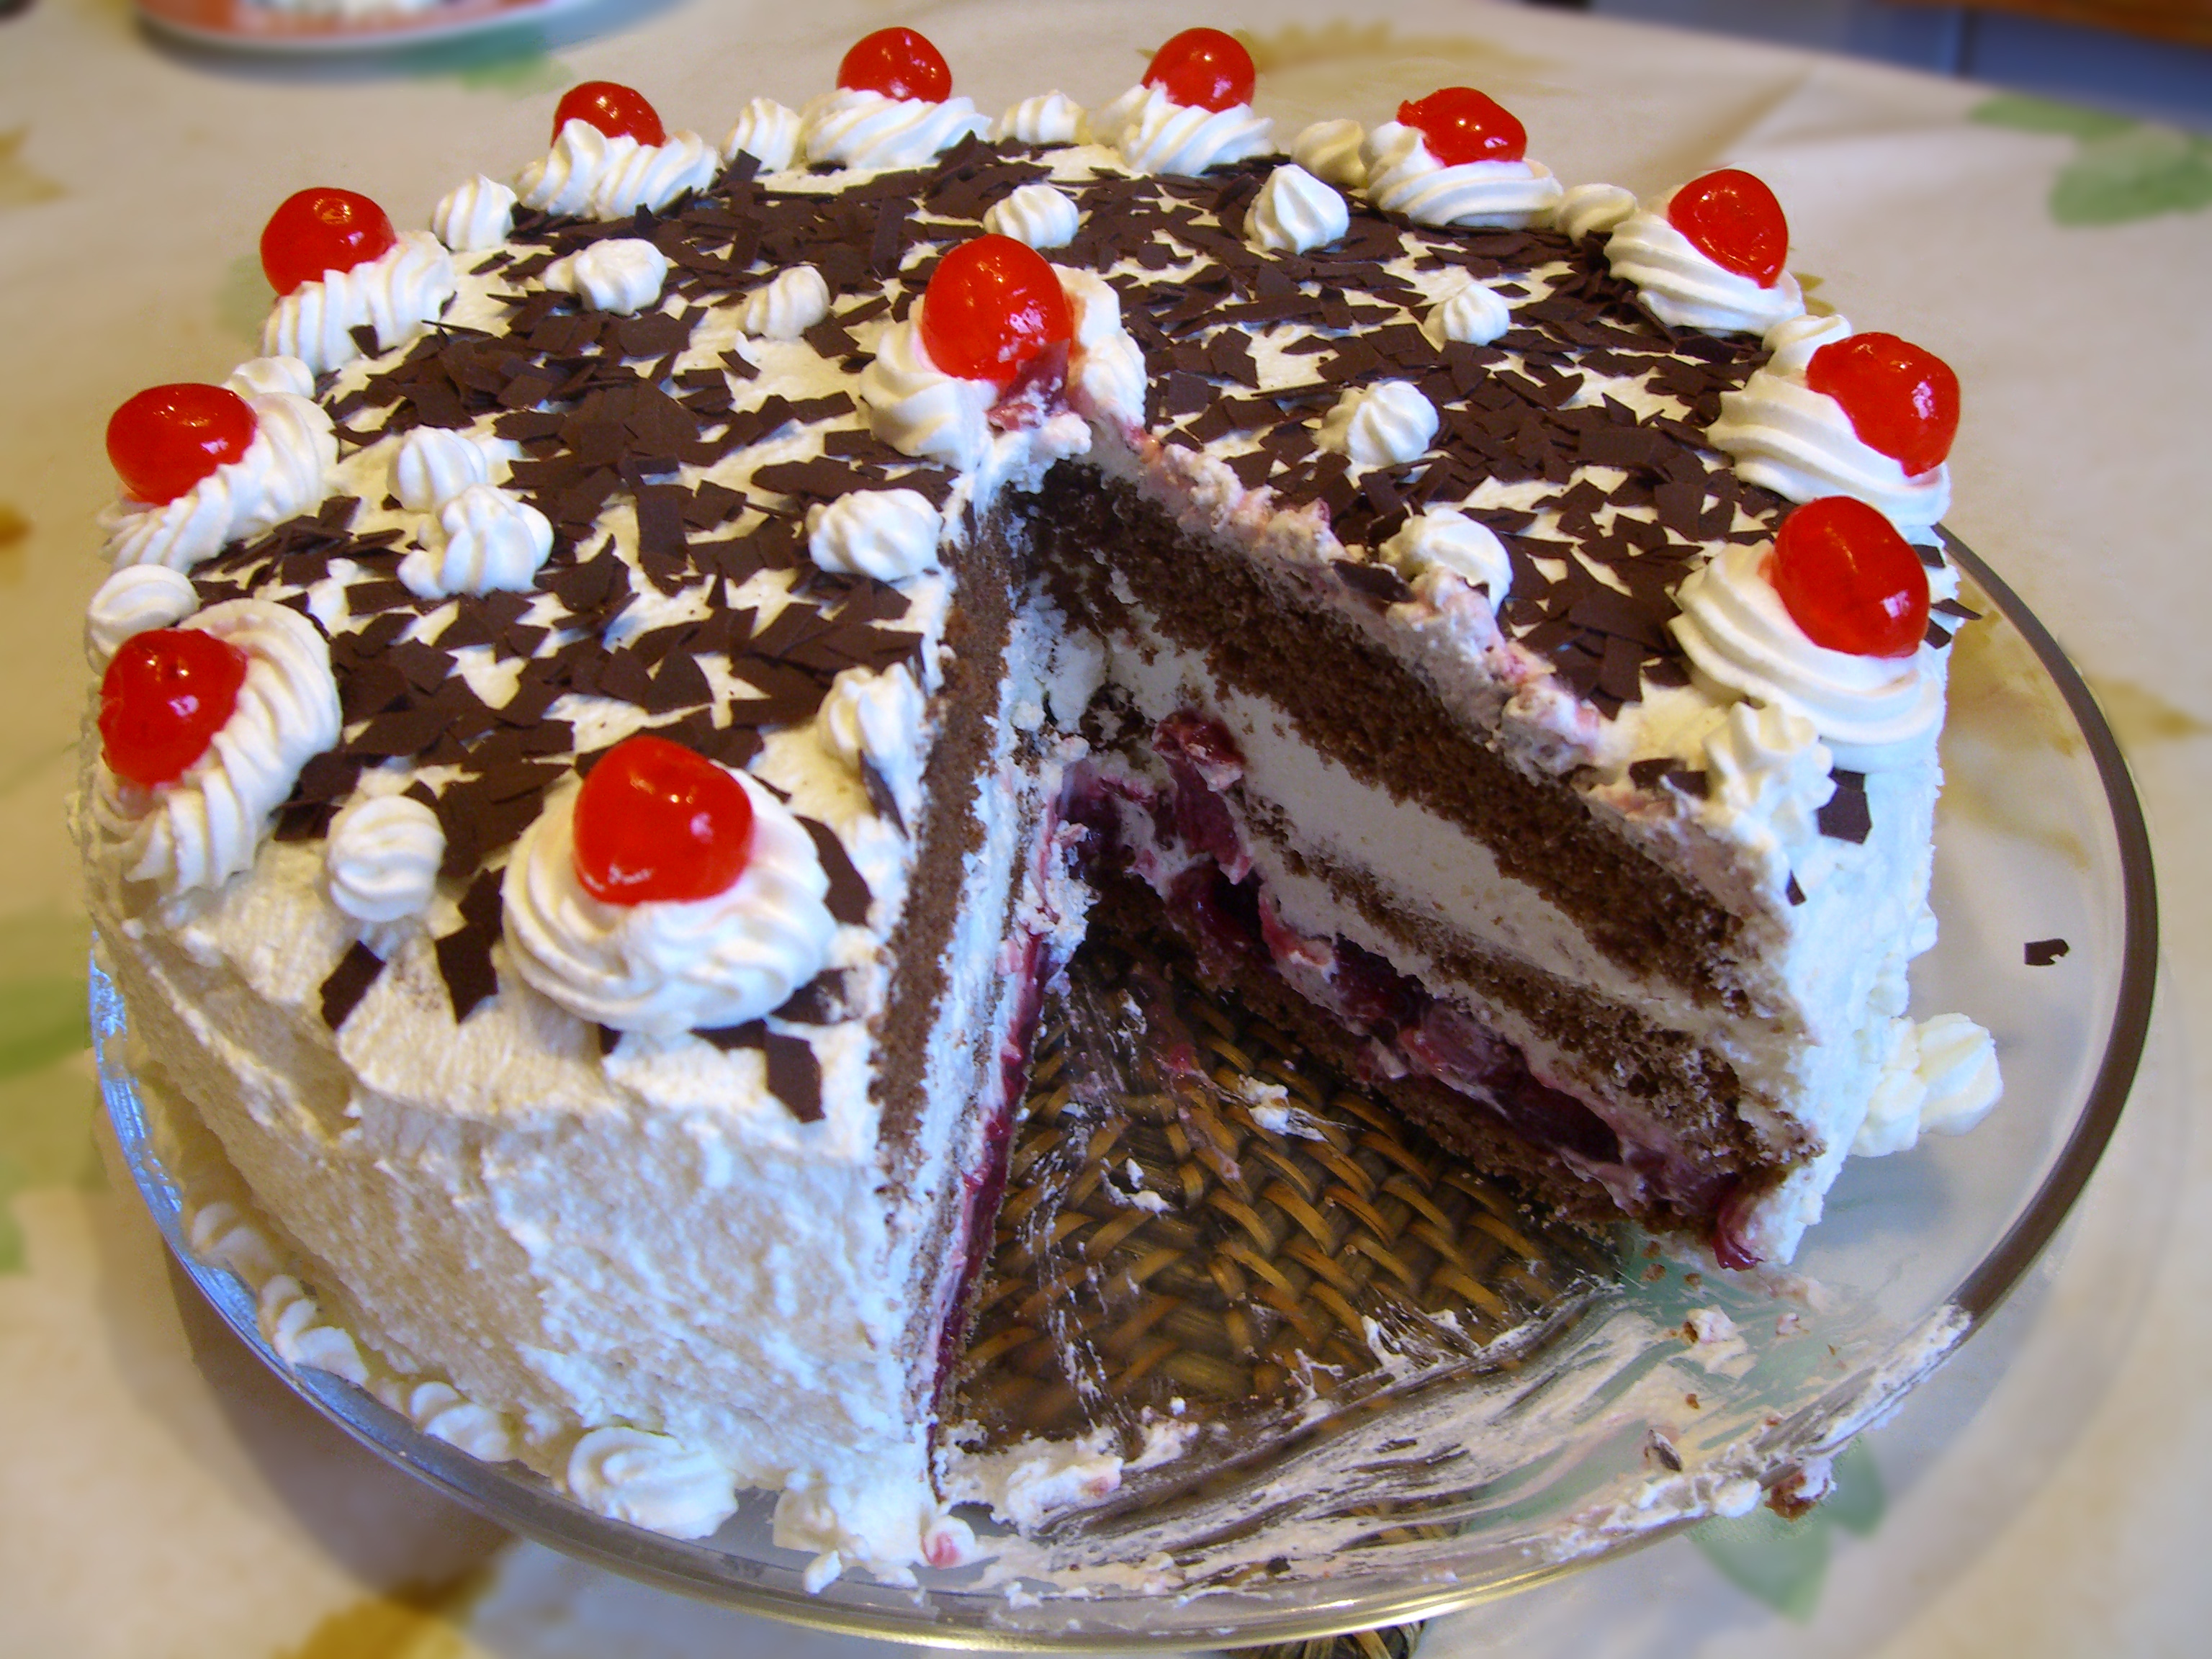 Chocolate cake with cream and cherries